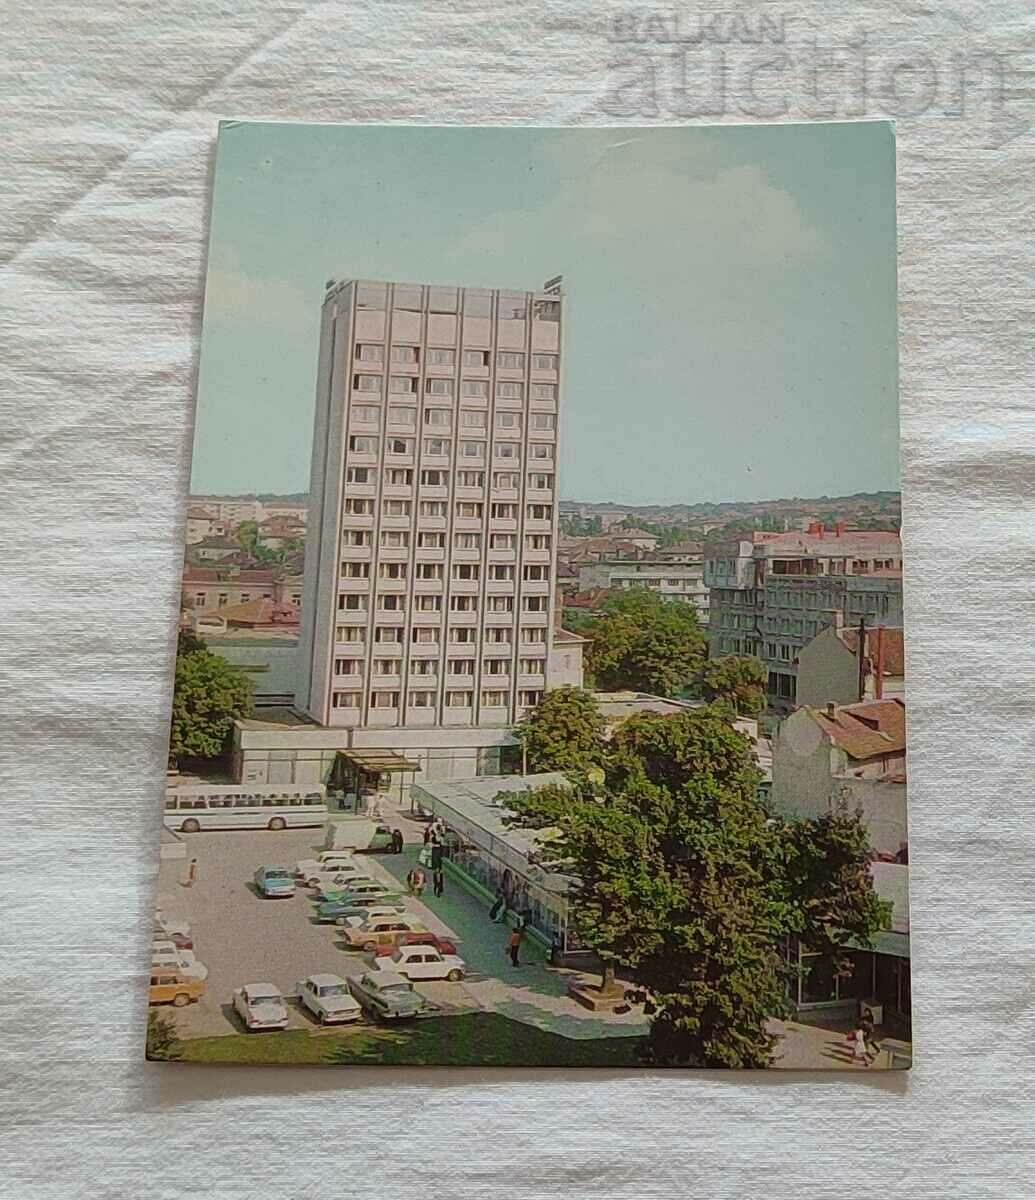 PLEVEN HOTEL "ROSTOV ON DON" Τ.Κ. 1979